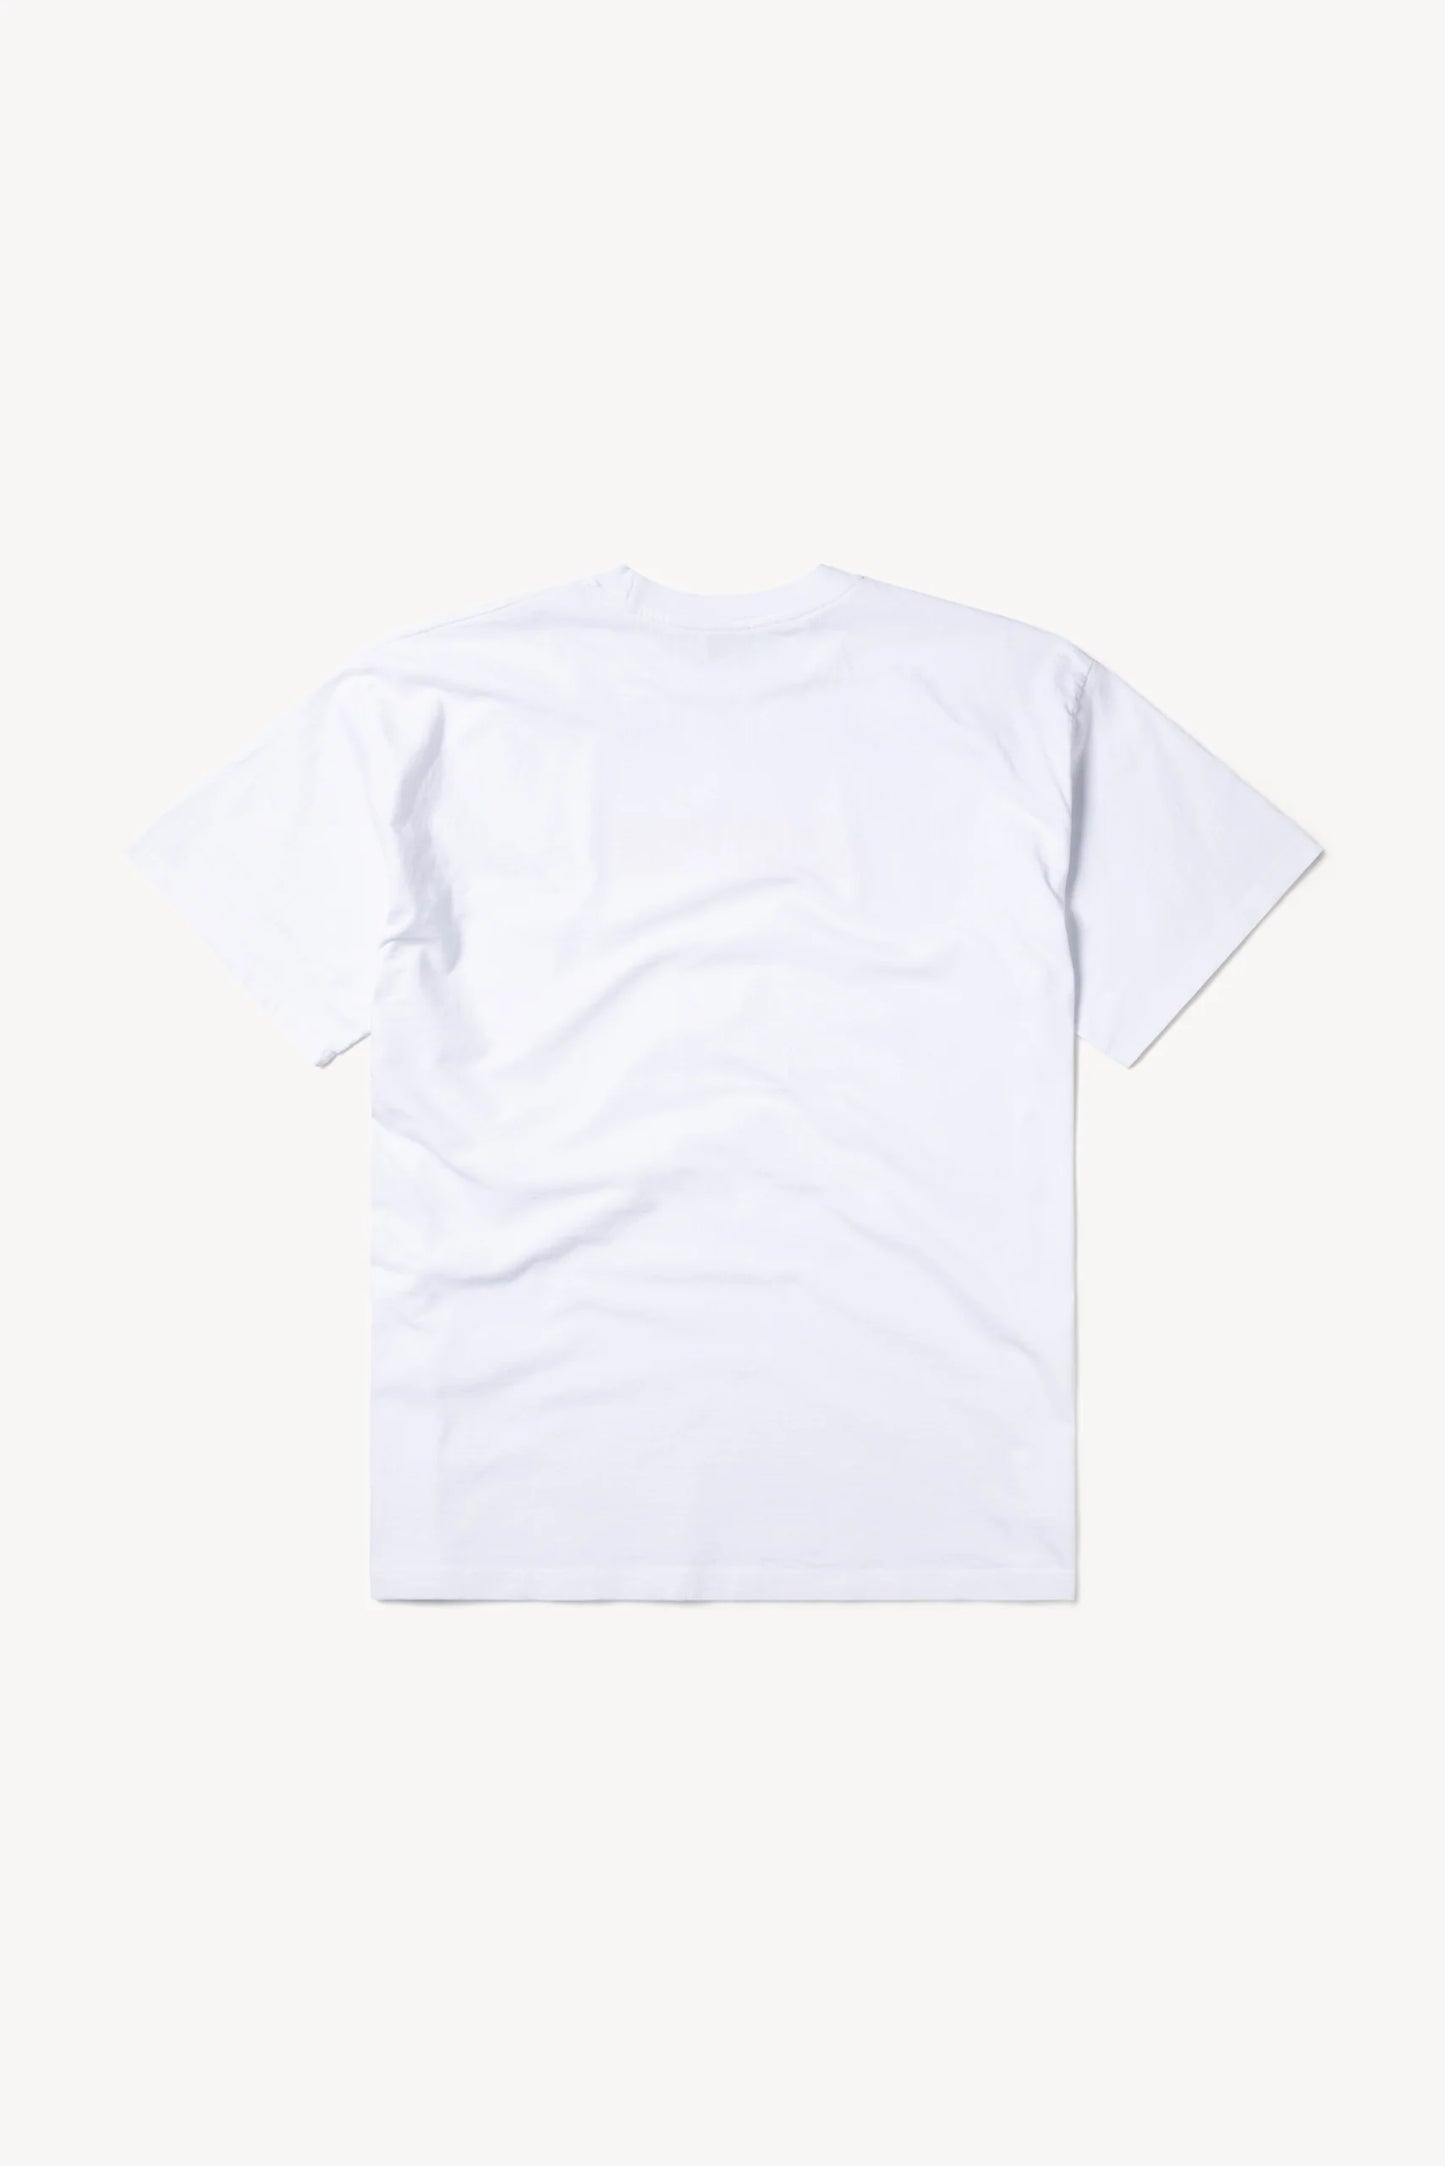 No Problemo Supremo, White, T-Shirt